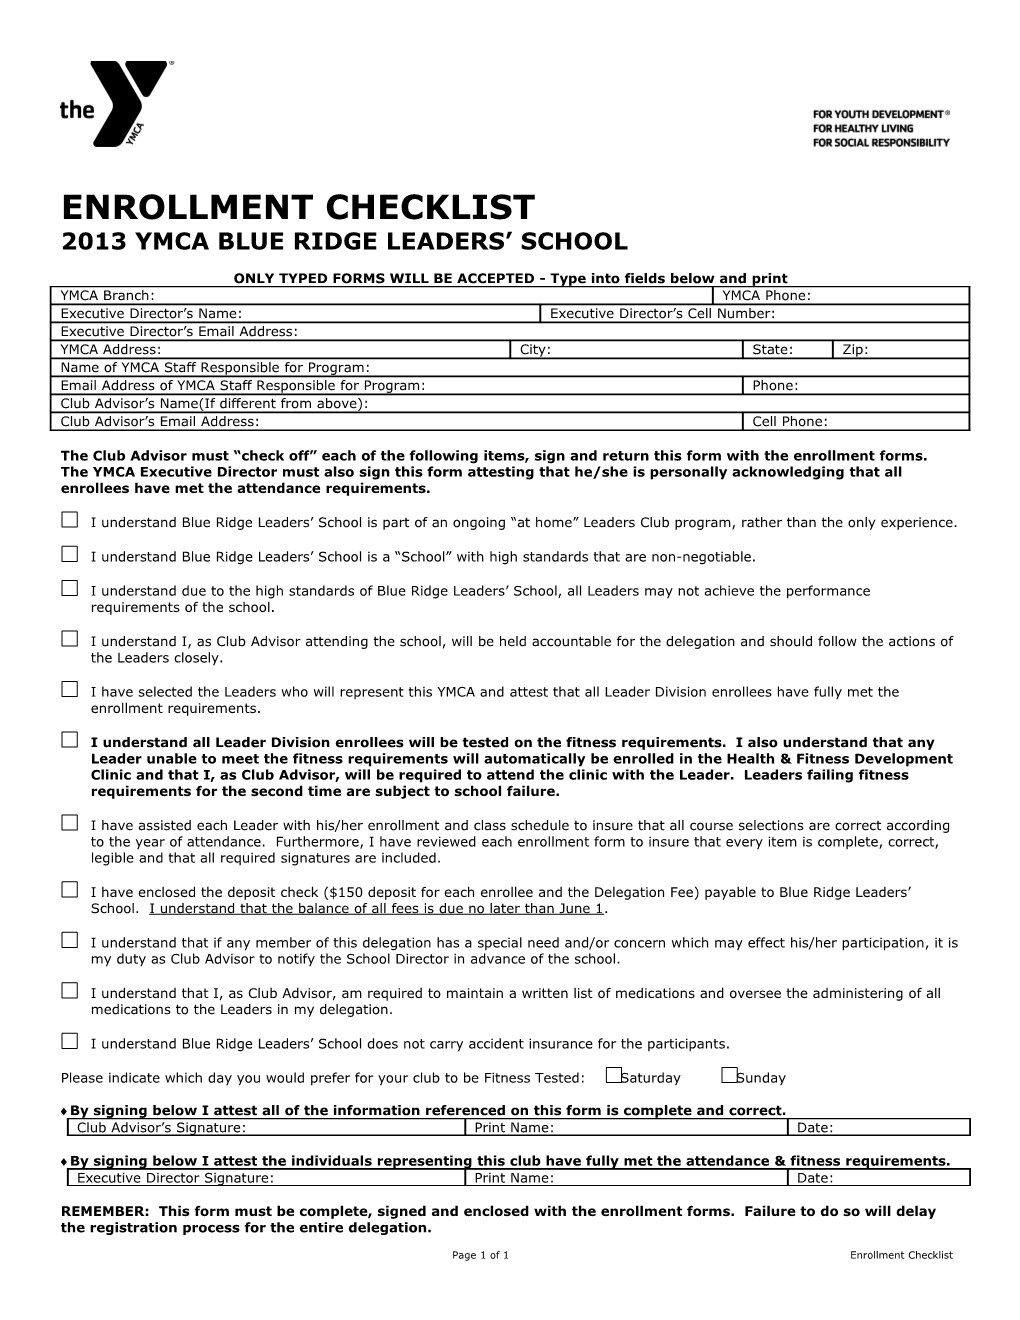 YMCA Blue Ridge Leaders School 1999 Enrollment Checklist